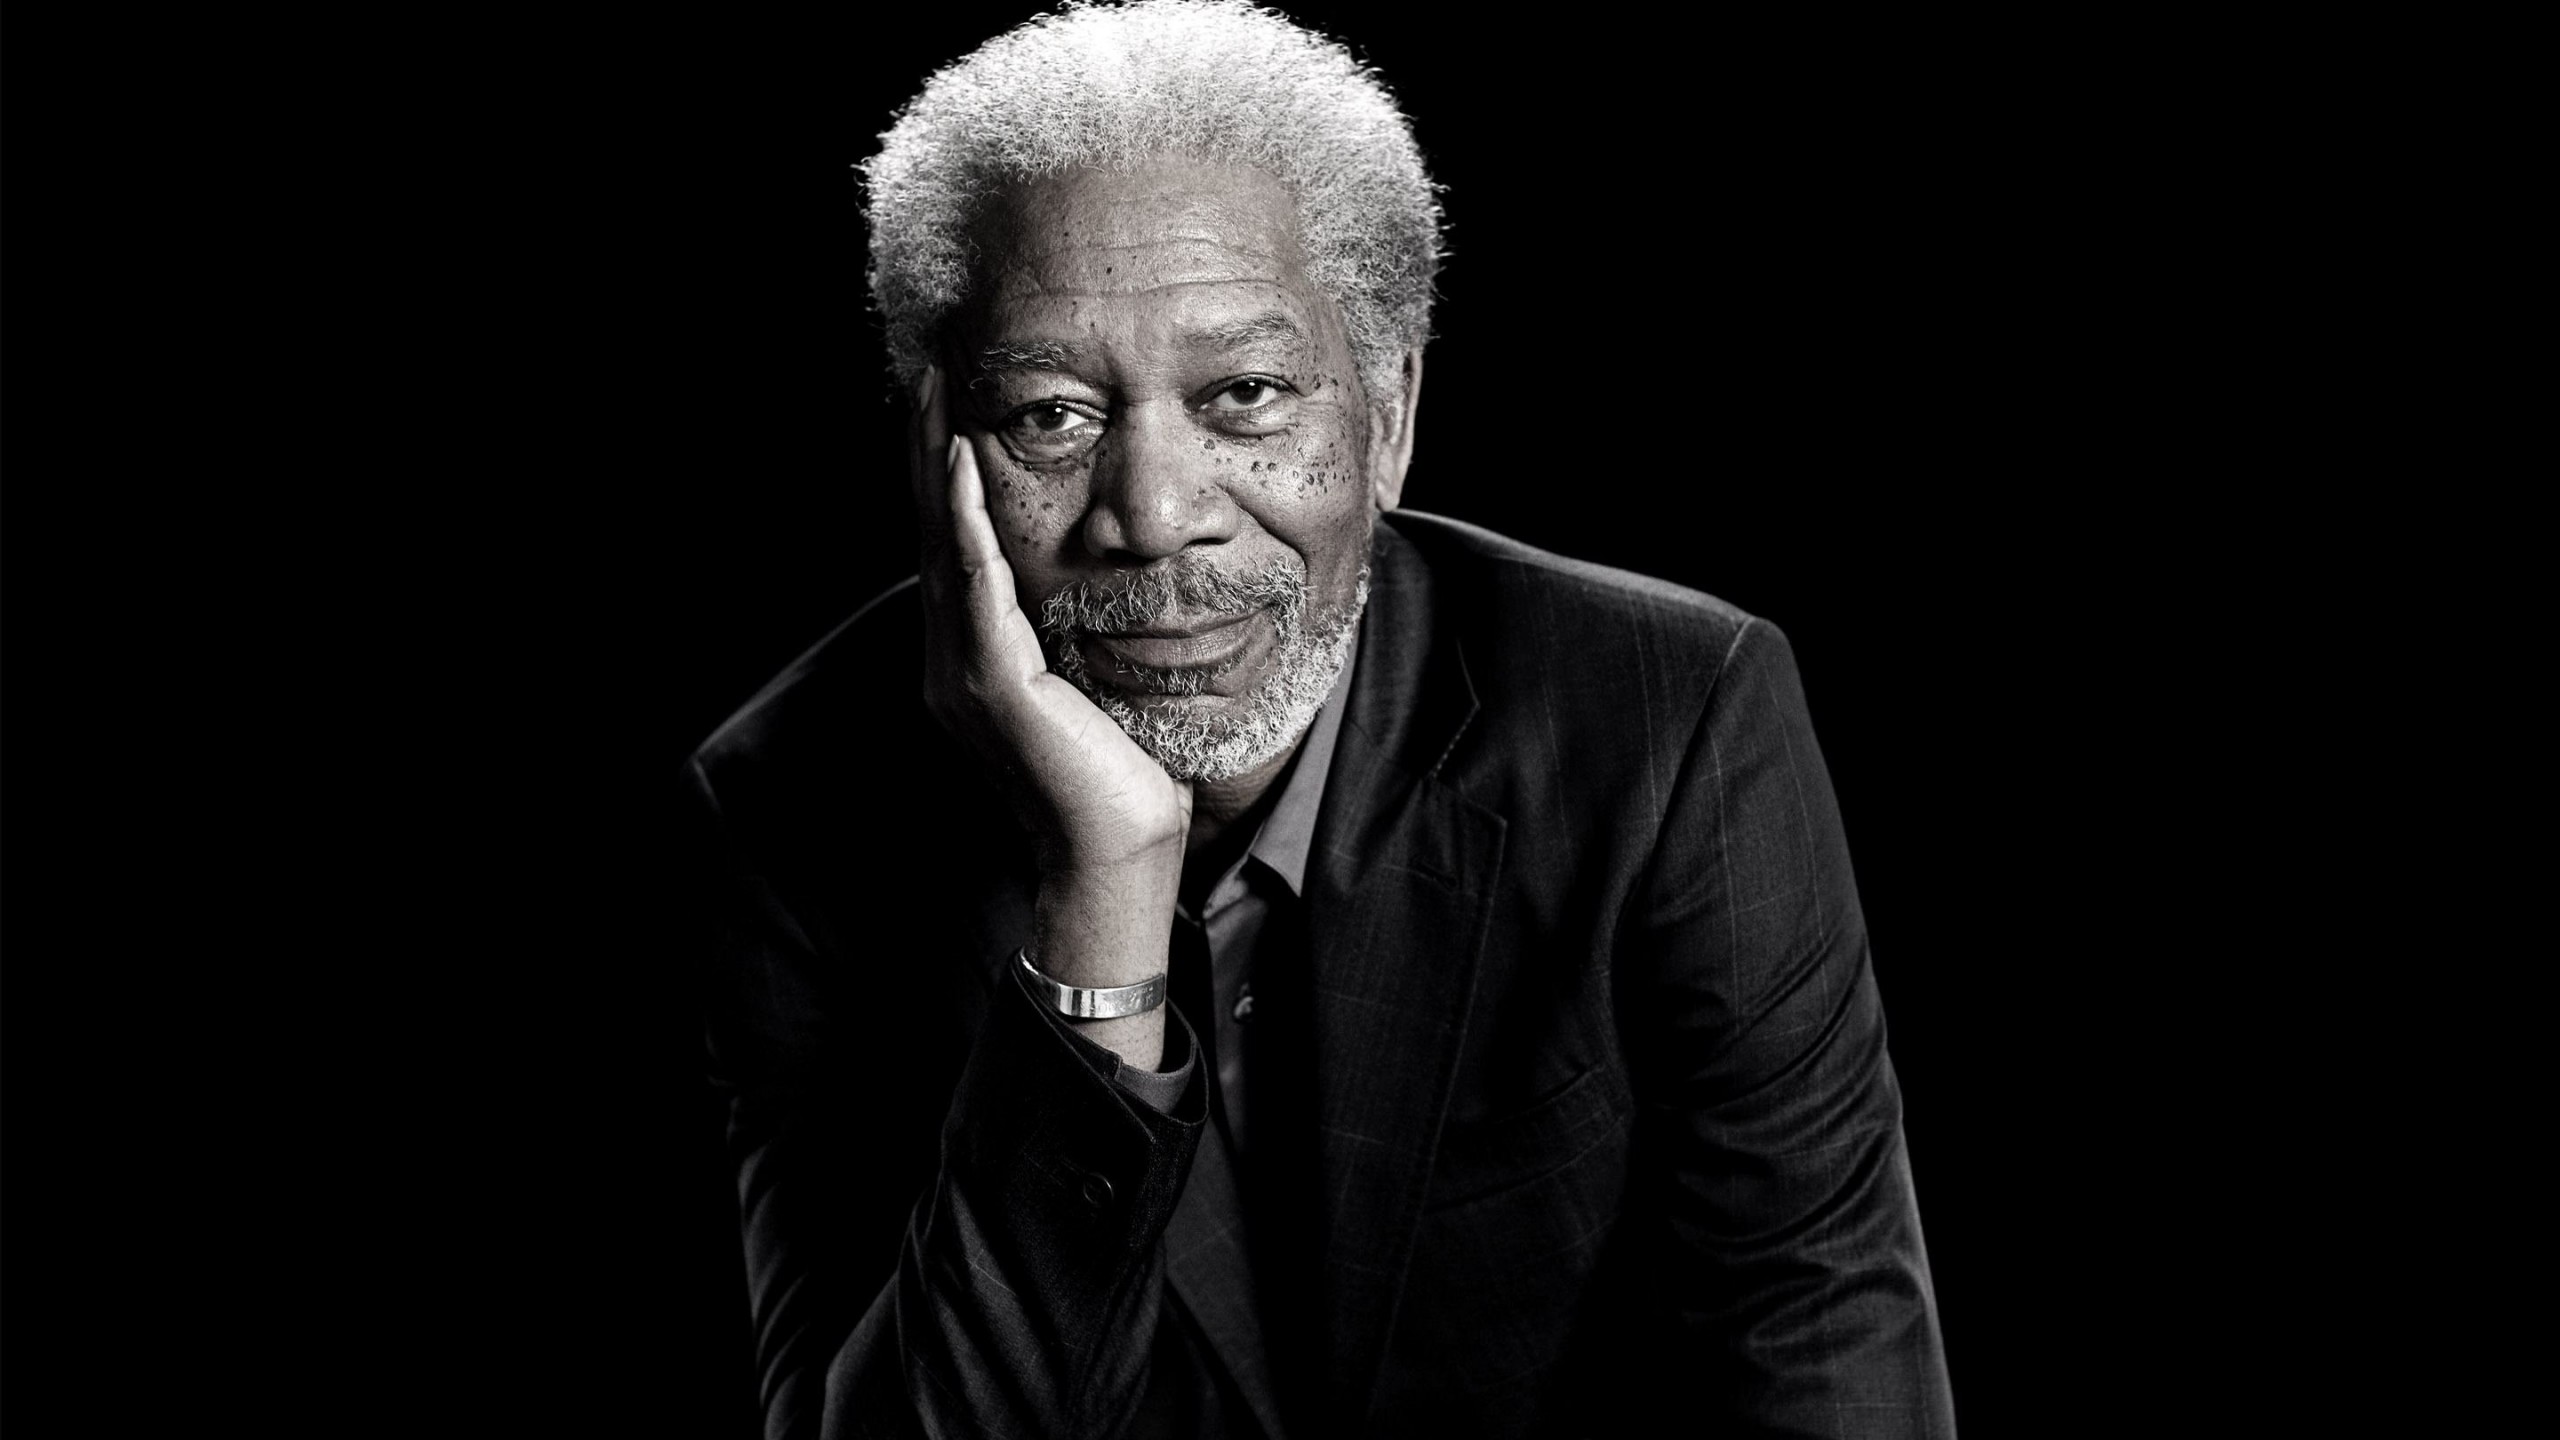 Morgan Freeman Portrait Wallpaper for Desktop 2560x1440